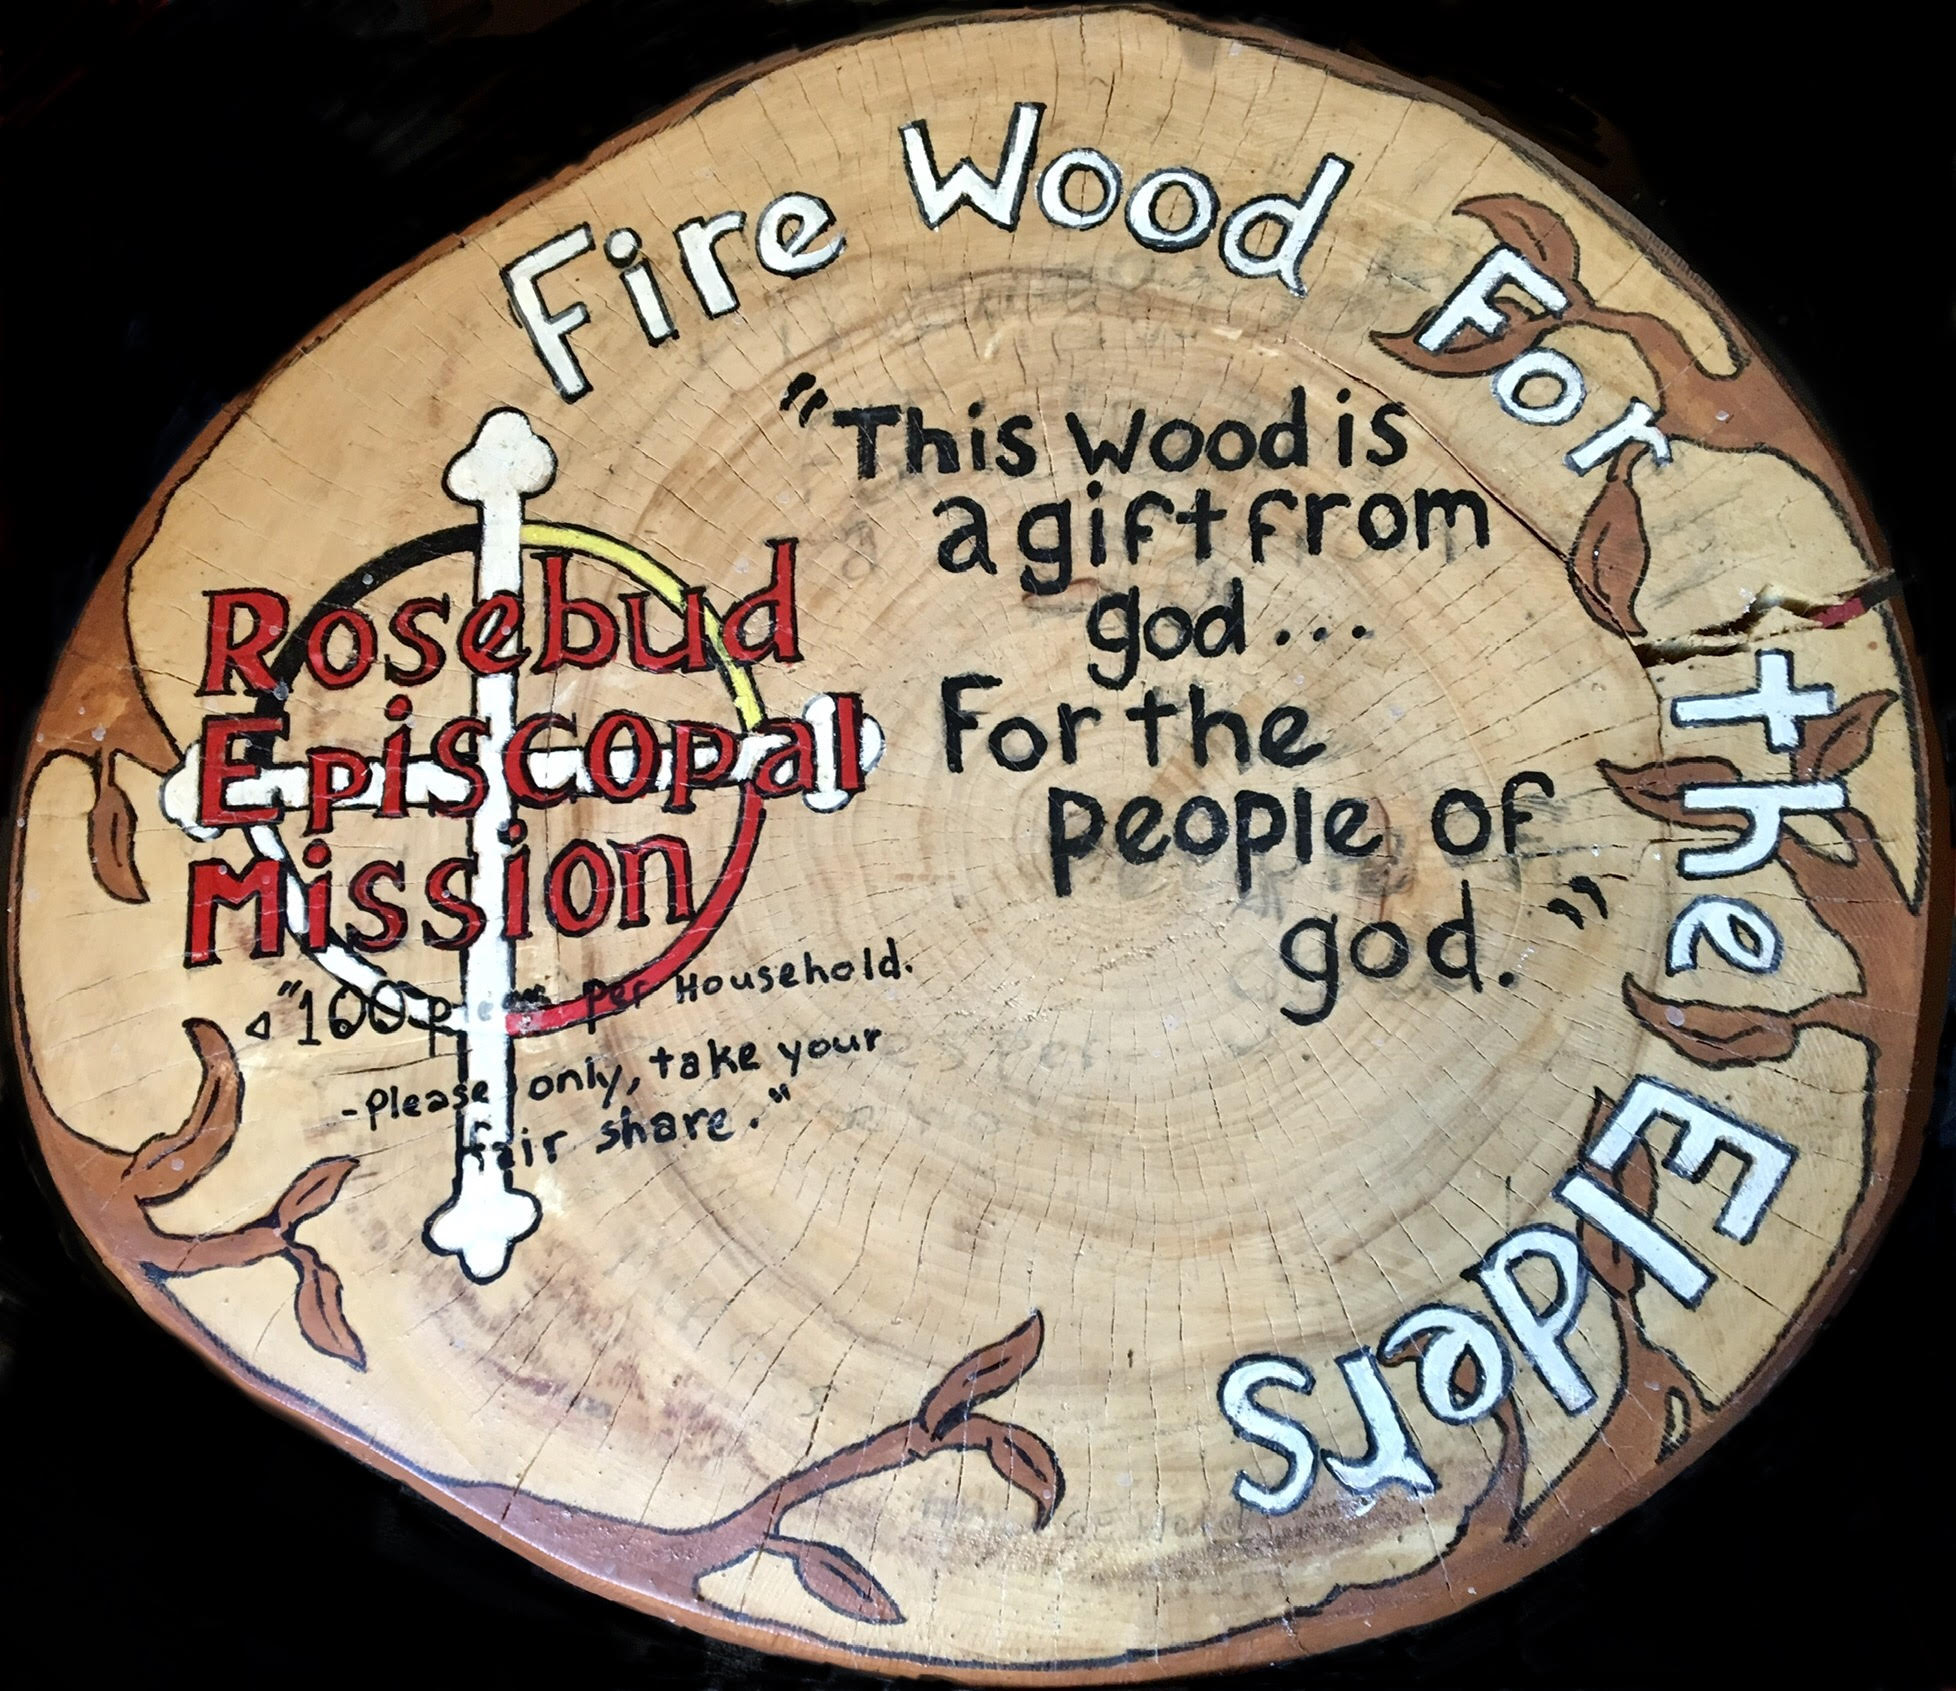 Firewood program